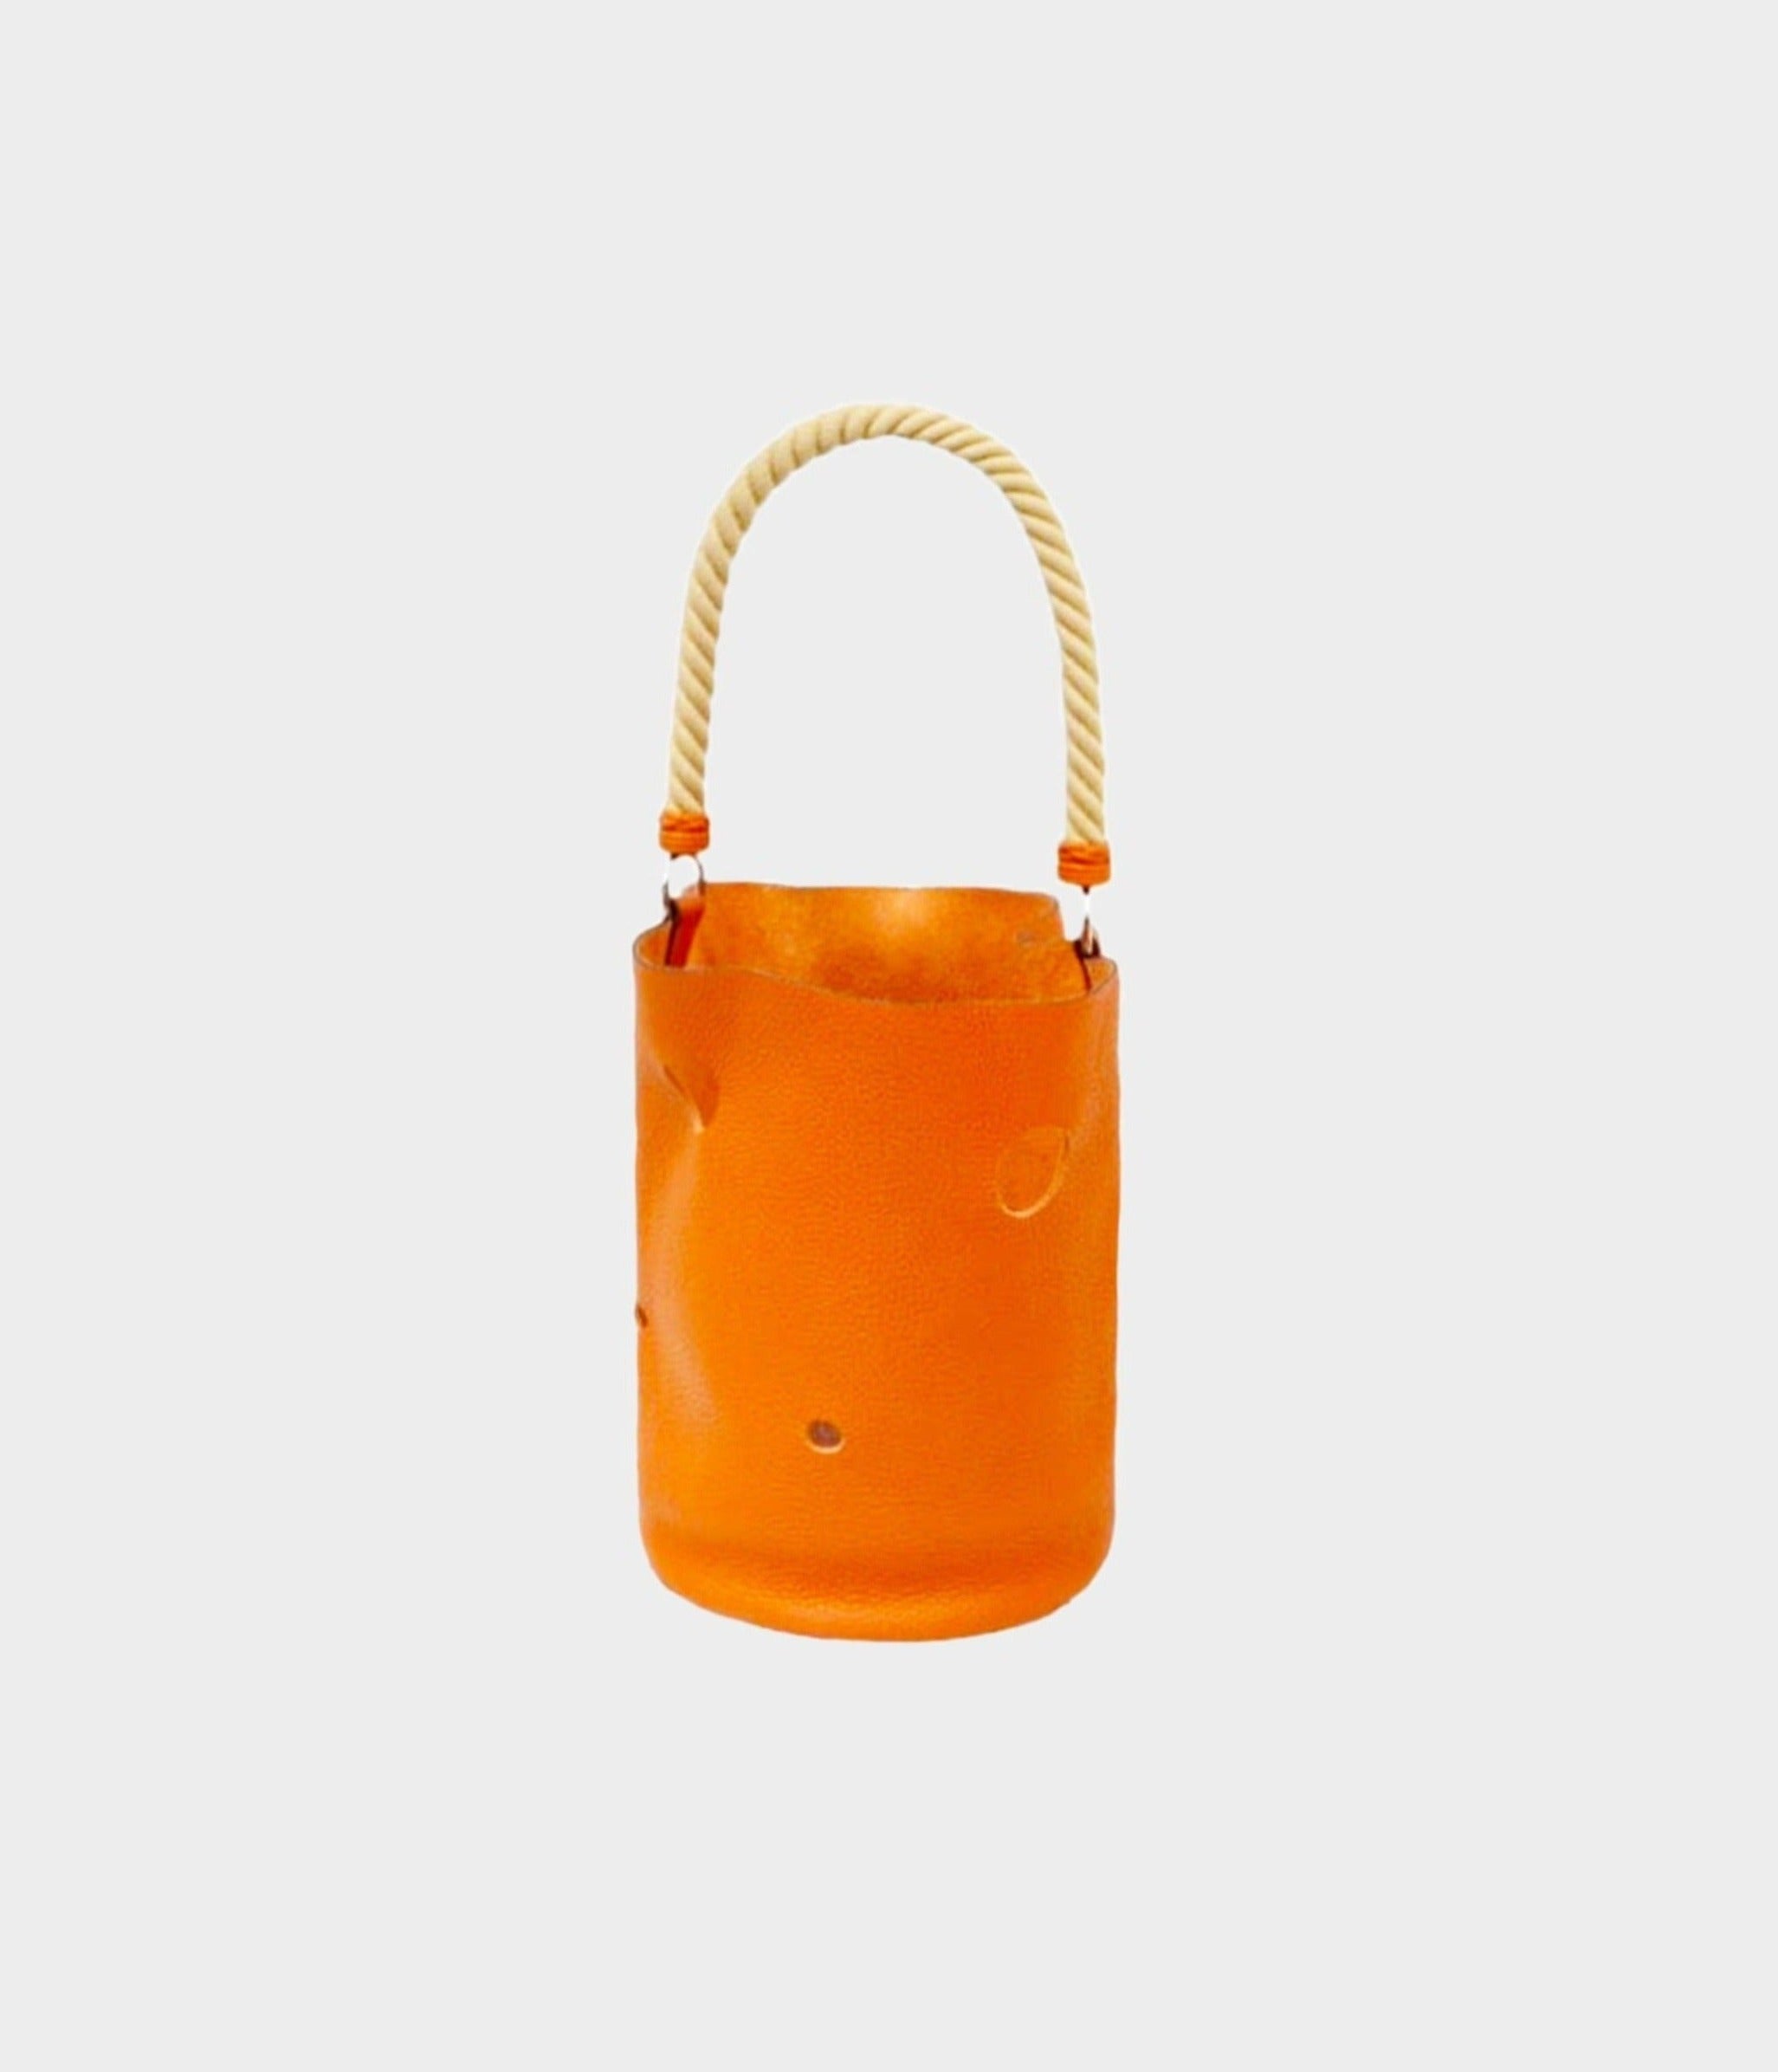 Hermes 2005 Orange Clemence Mangeoire Handbag